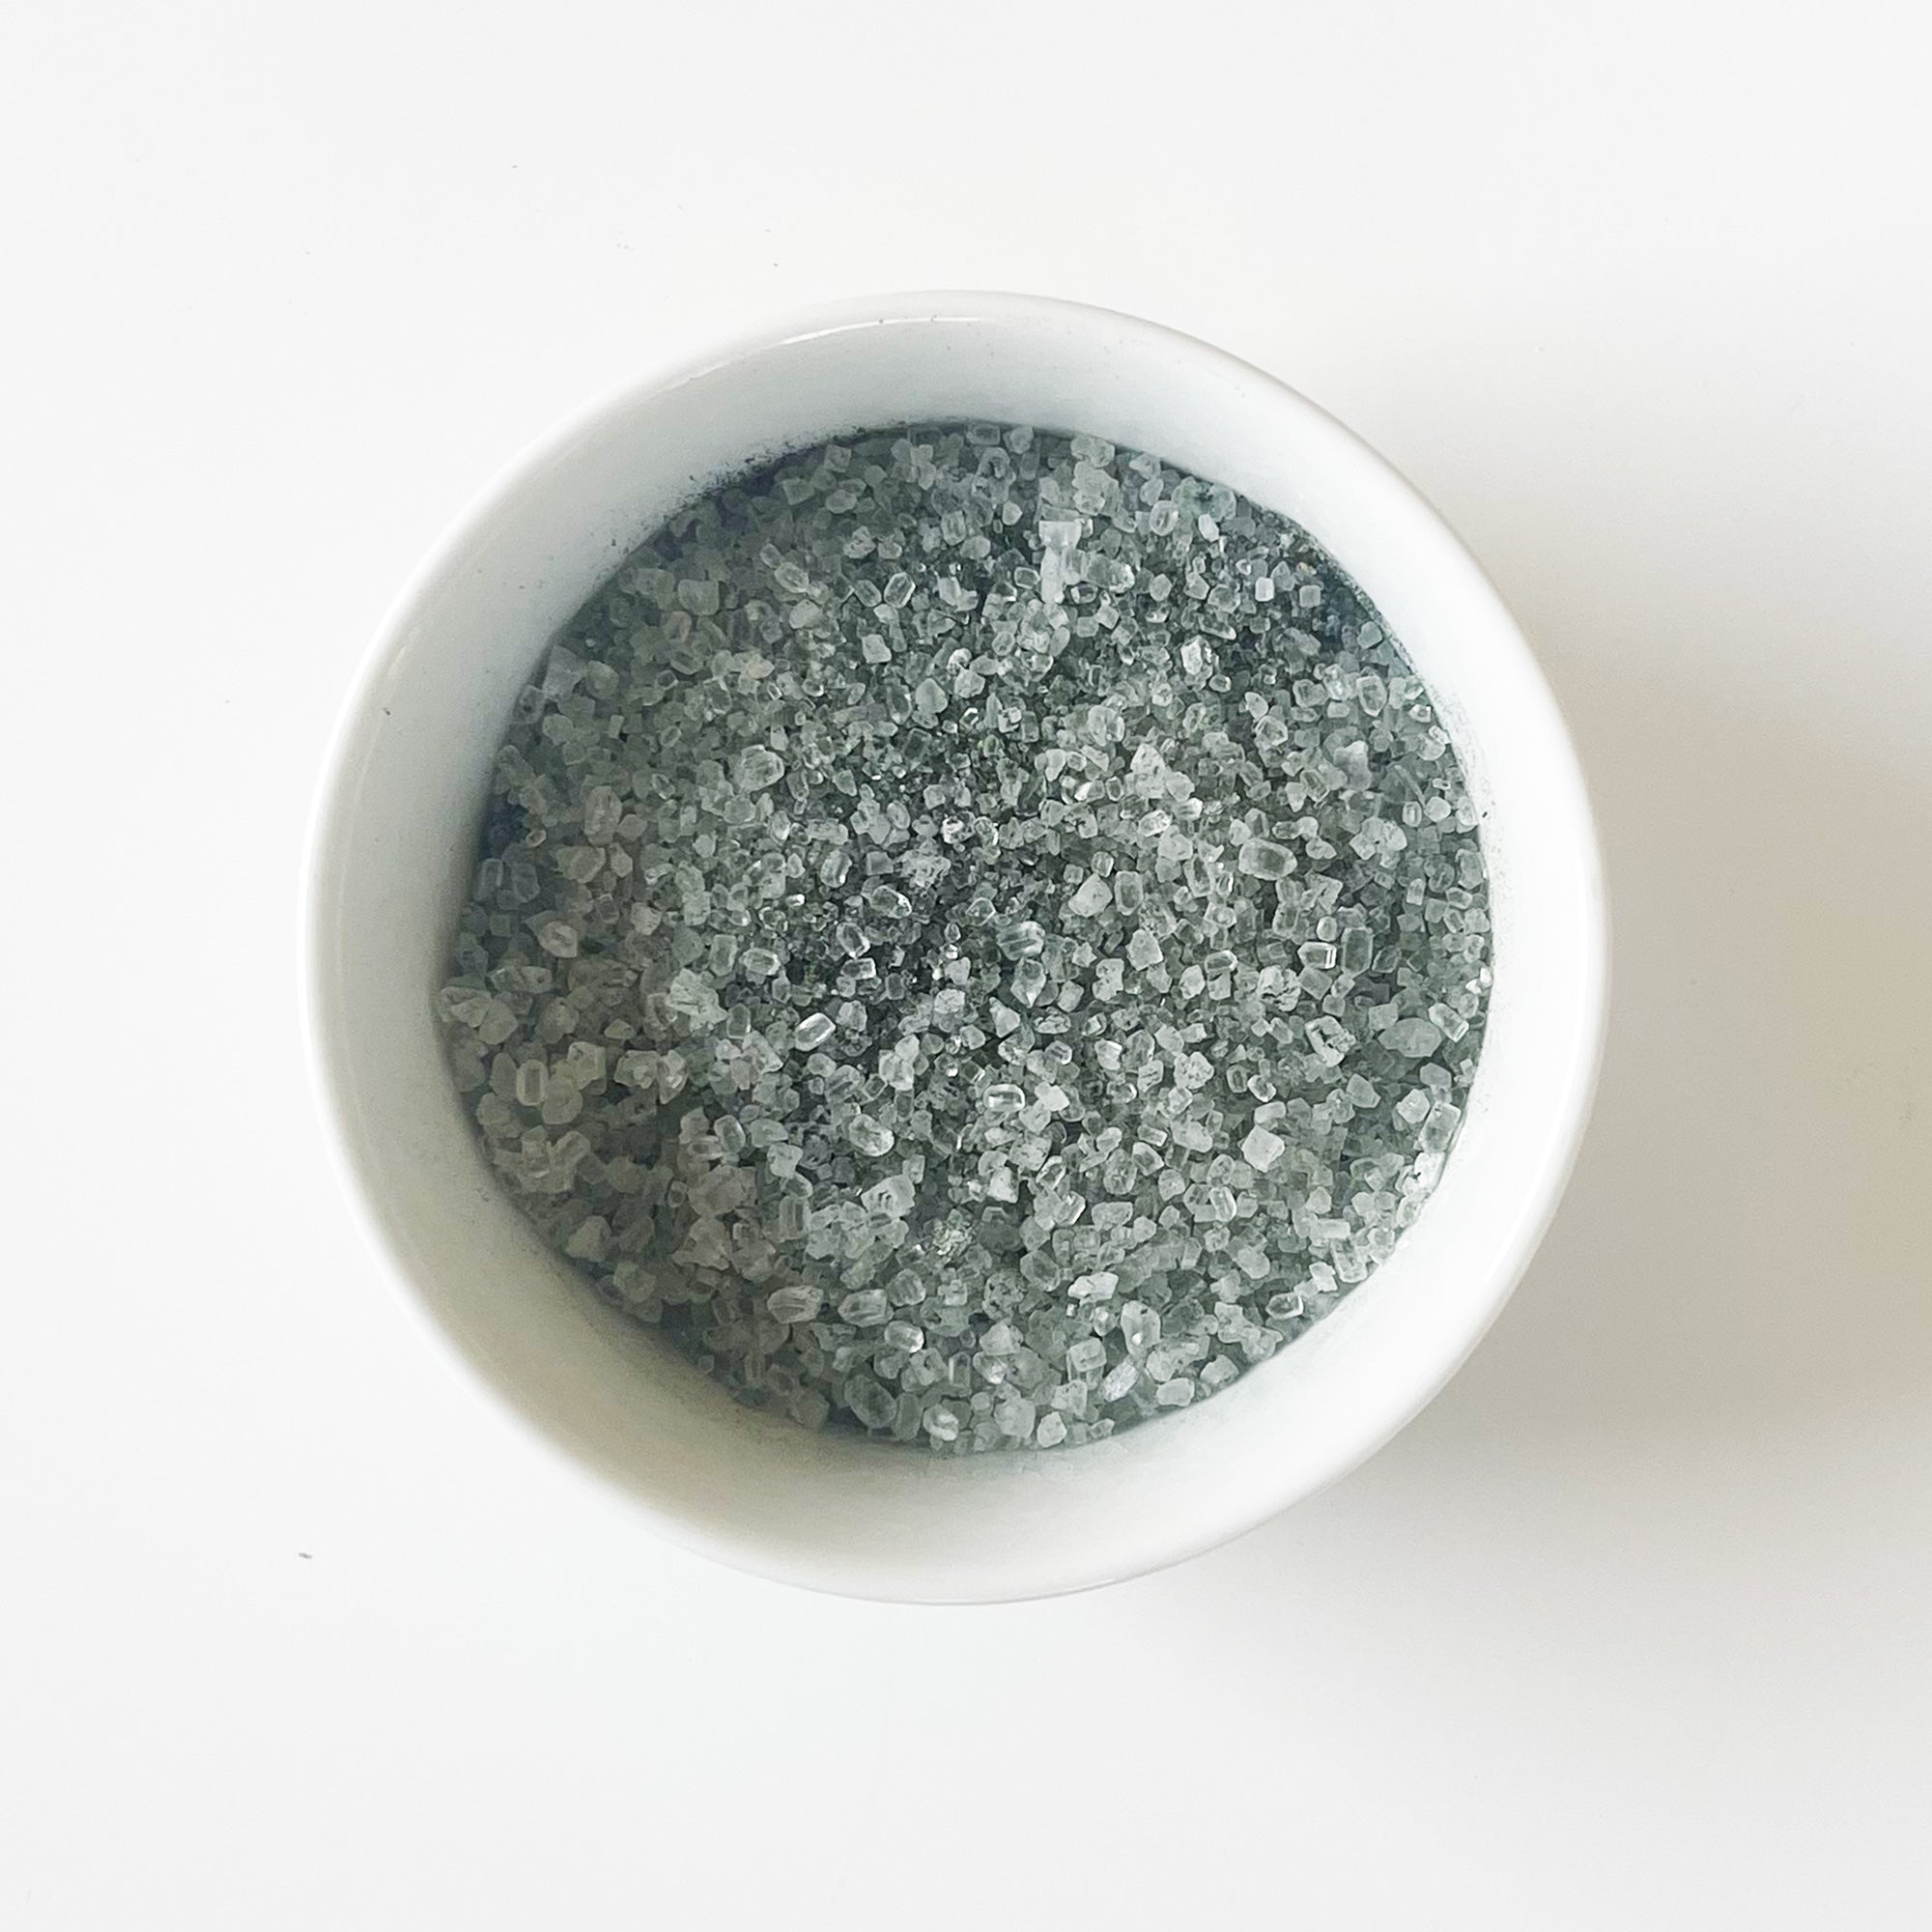 Cleanse: Spirulina, Cinnamon + Rosemary Bath Salts